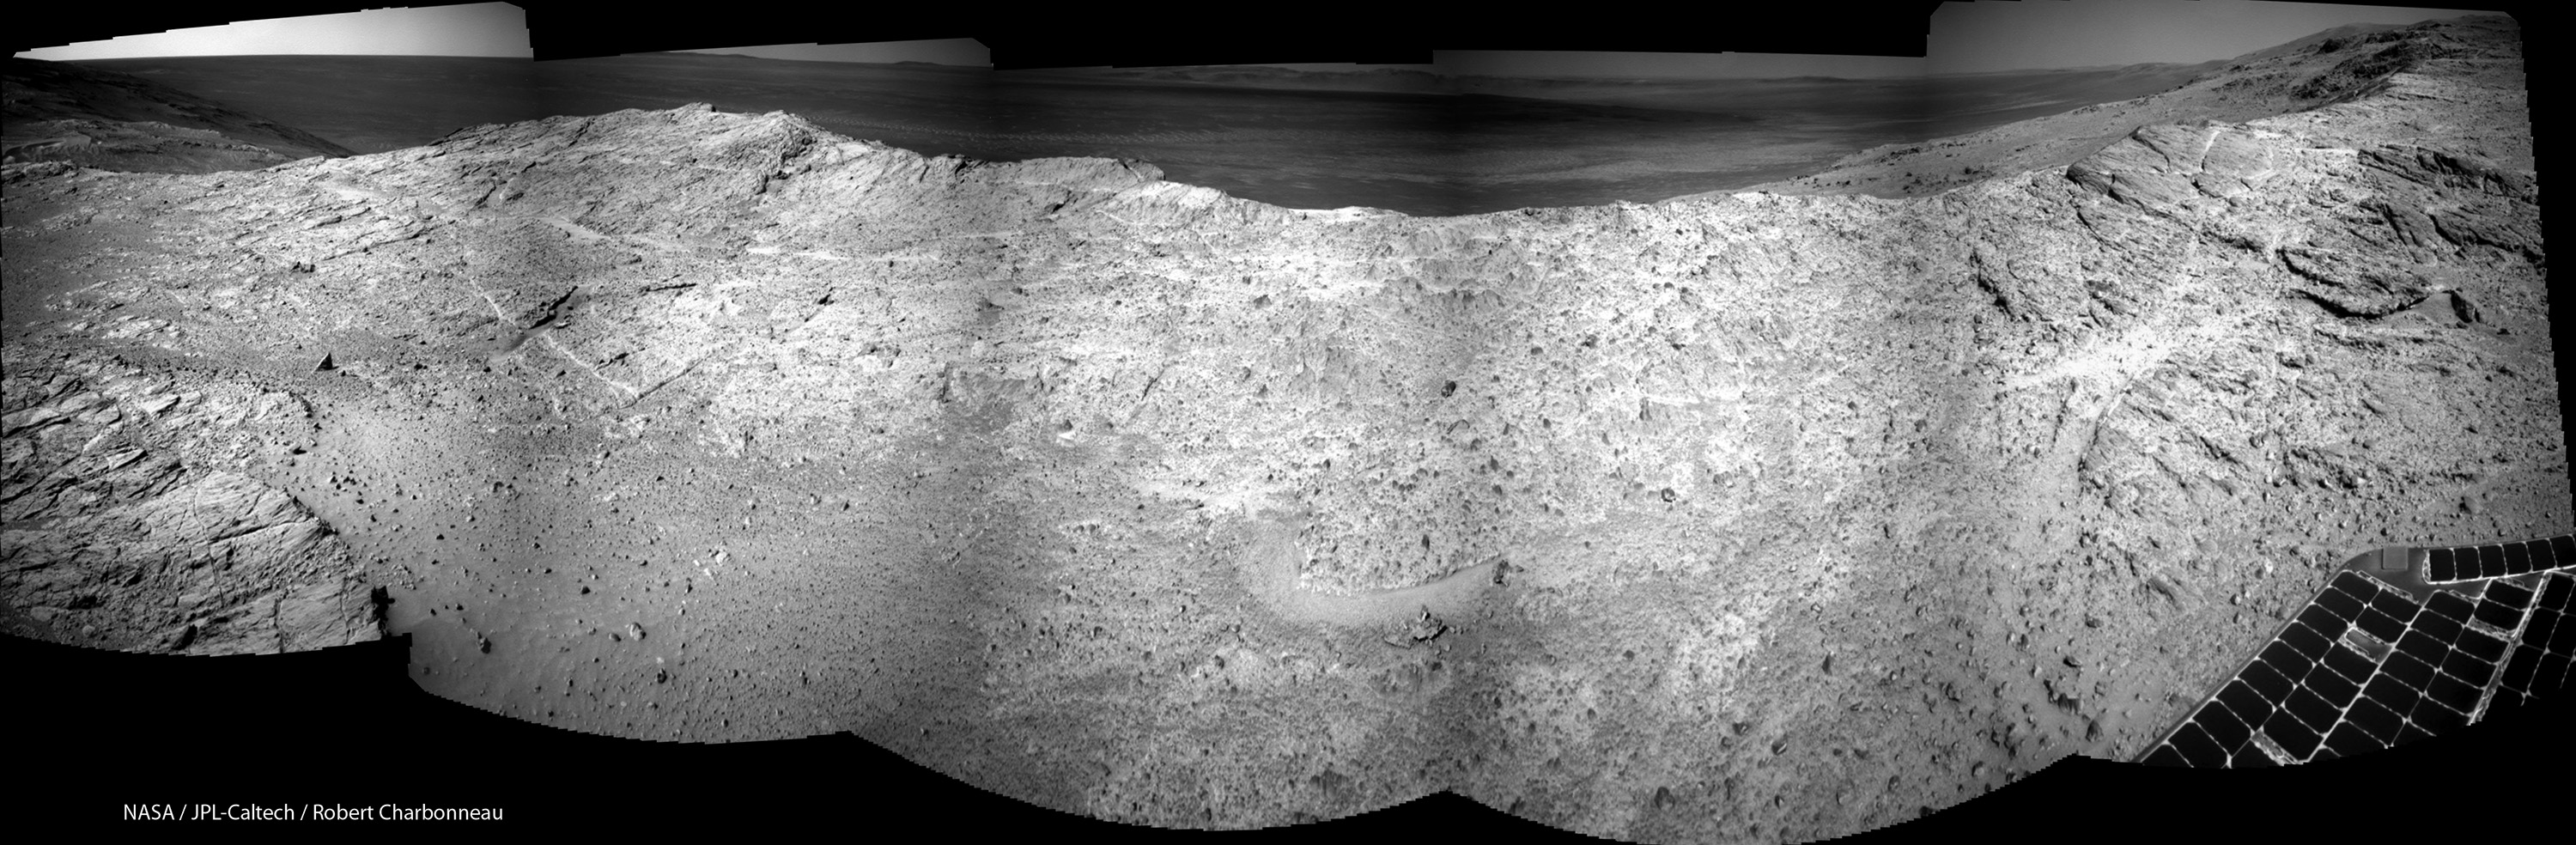 MARS: S putovanja rovera OPPORTUNITY  - Page 3 Index